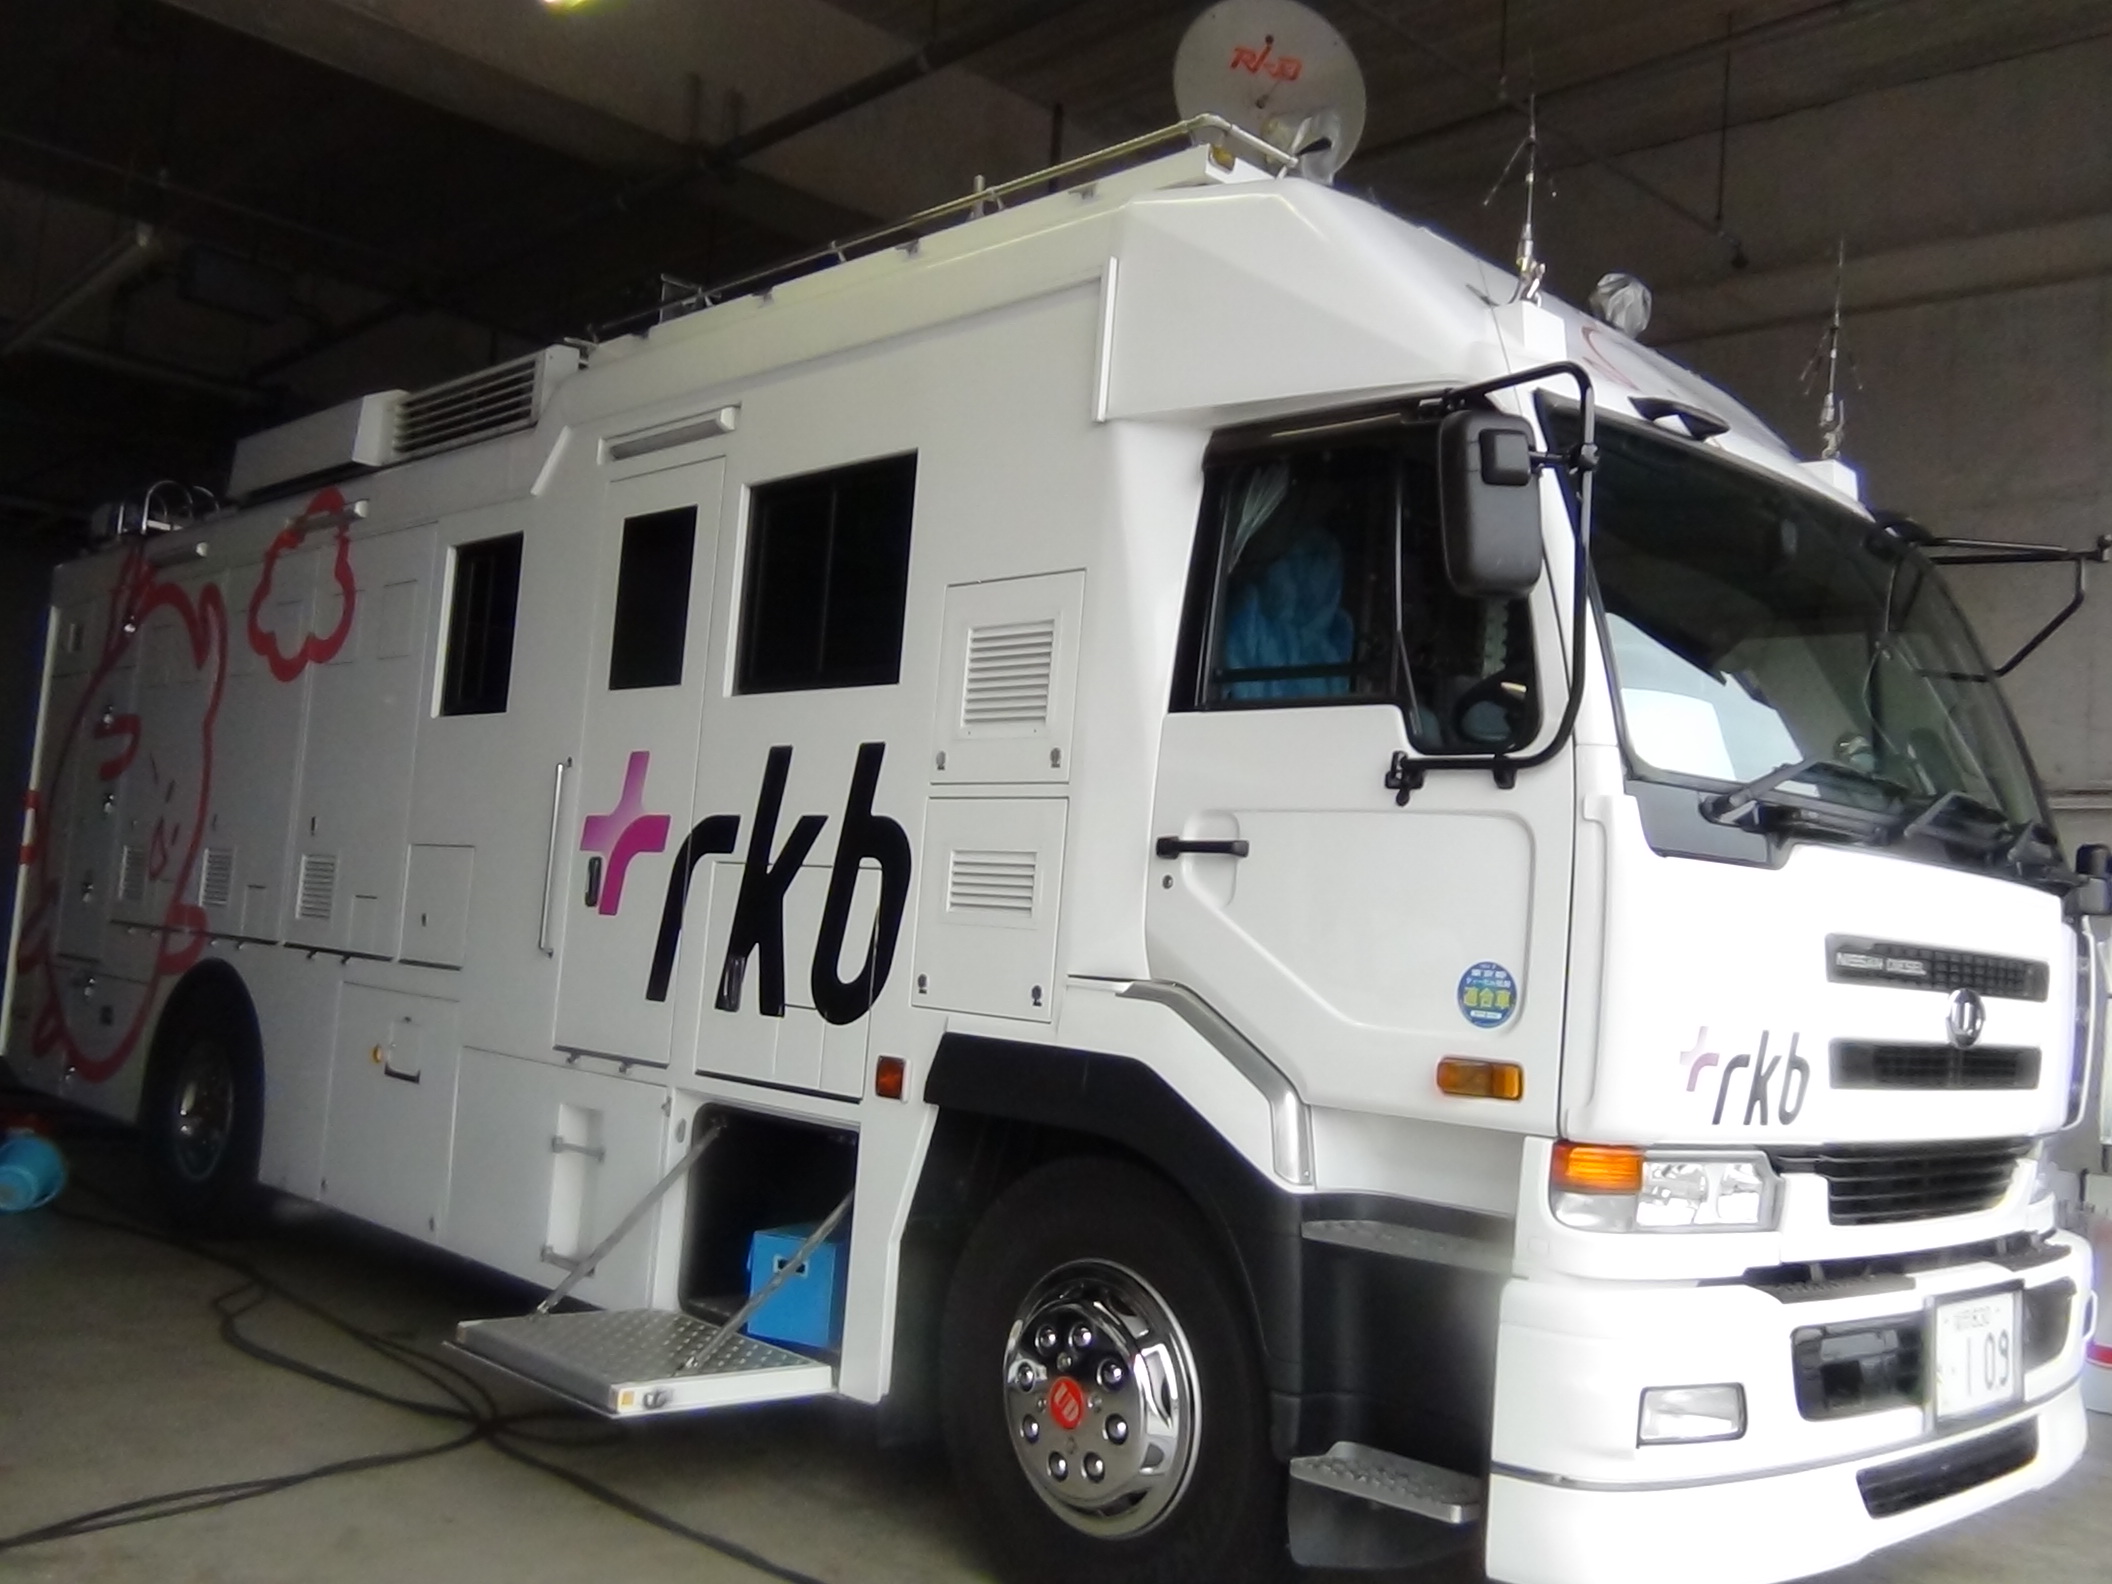 File Rkb毎日放送大型中継車 Jpg Wikimedia Commons